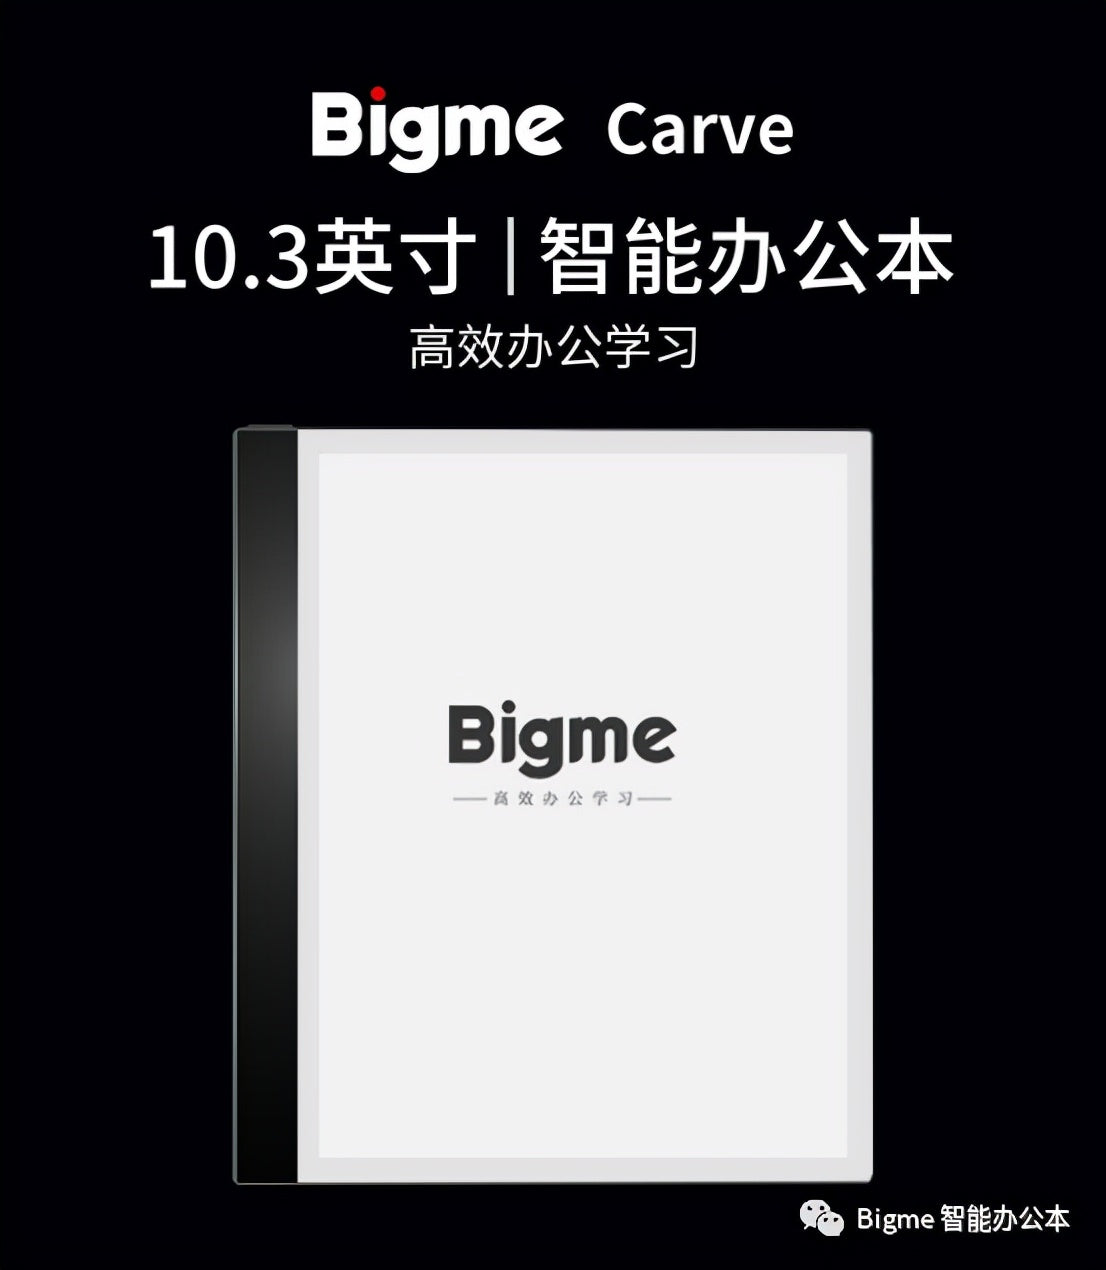 Bigme Carve with English 10.3 B&W E-note